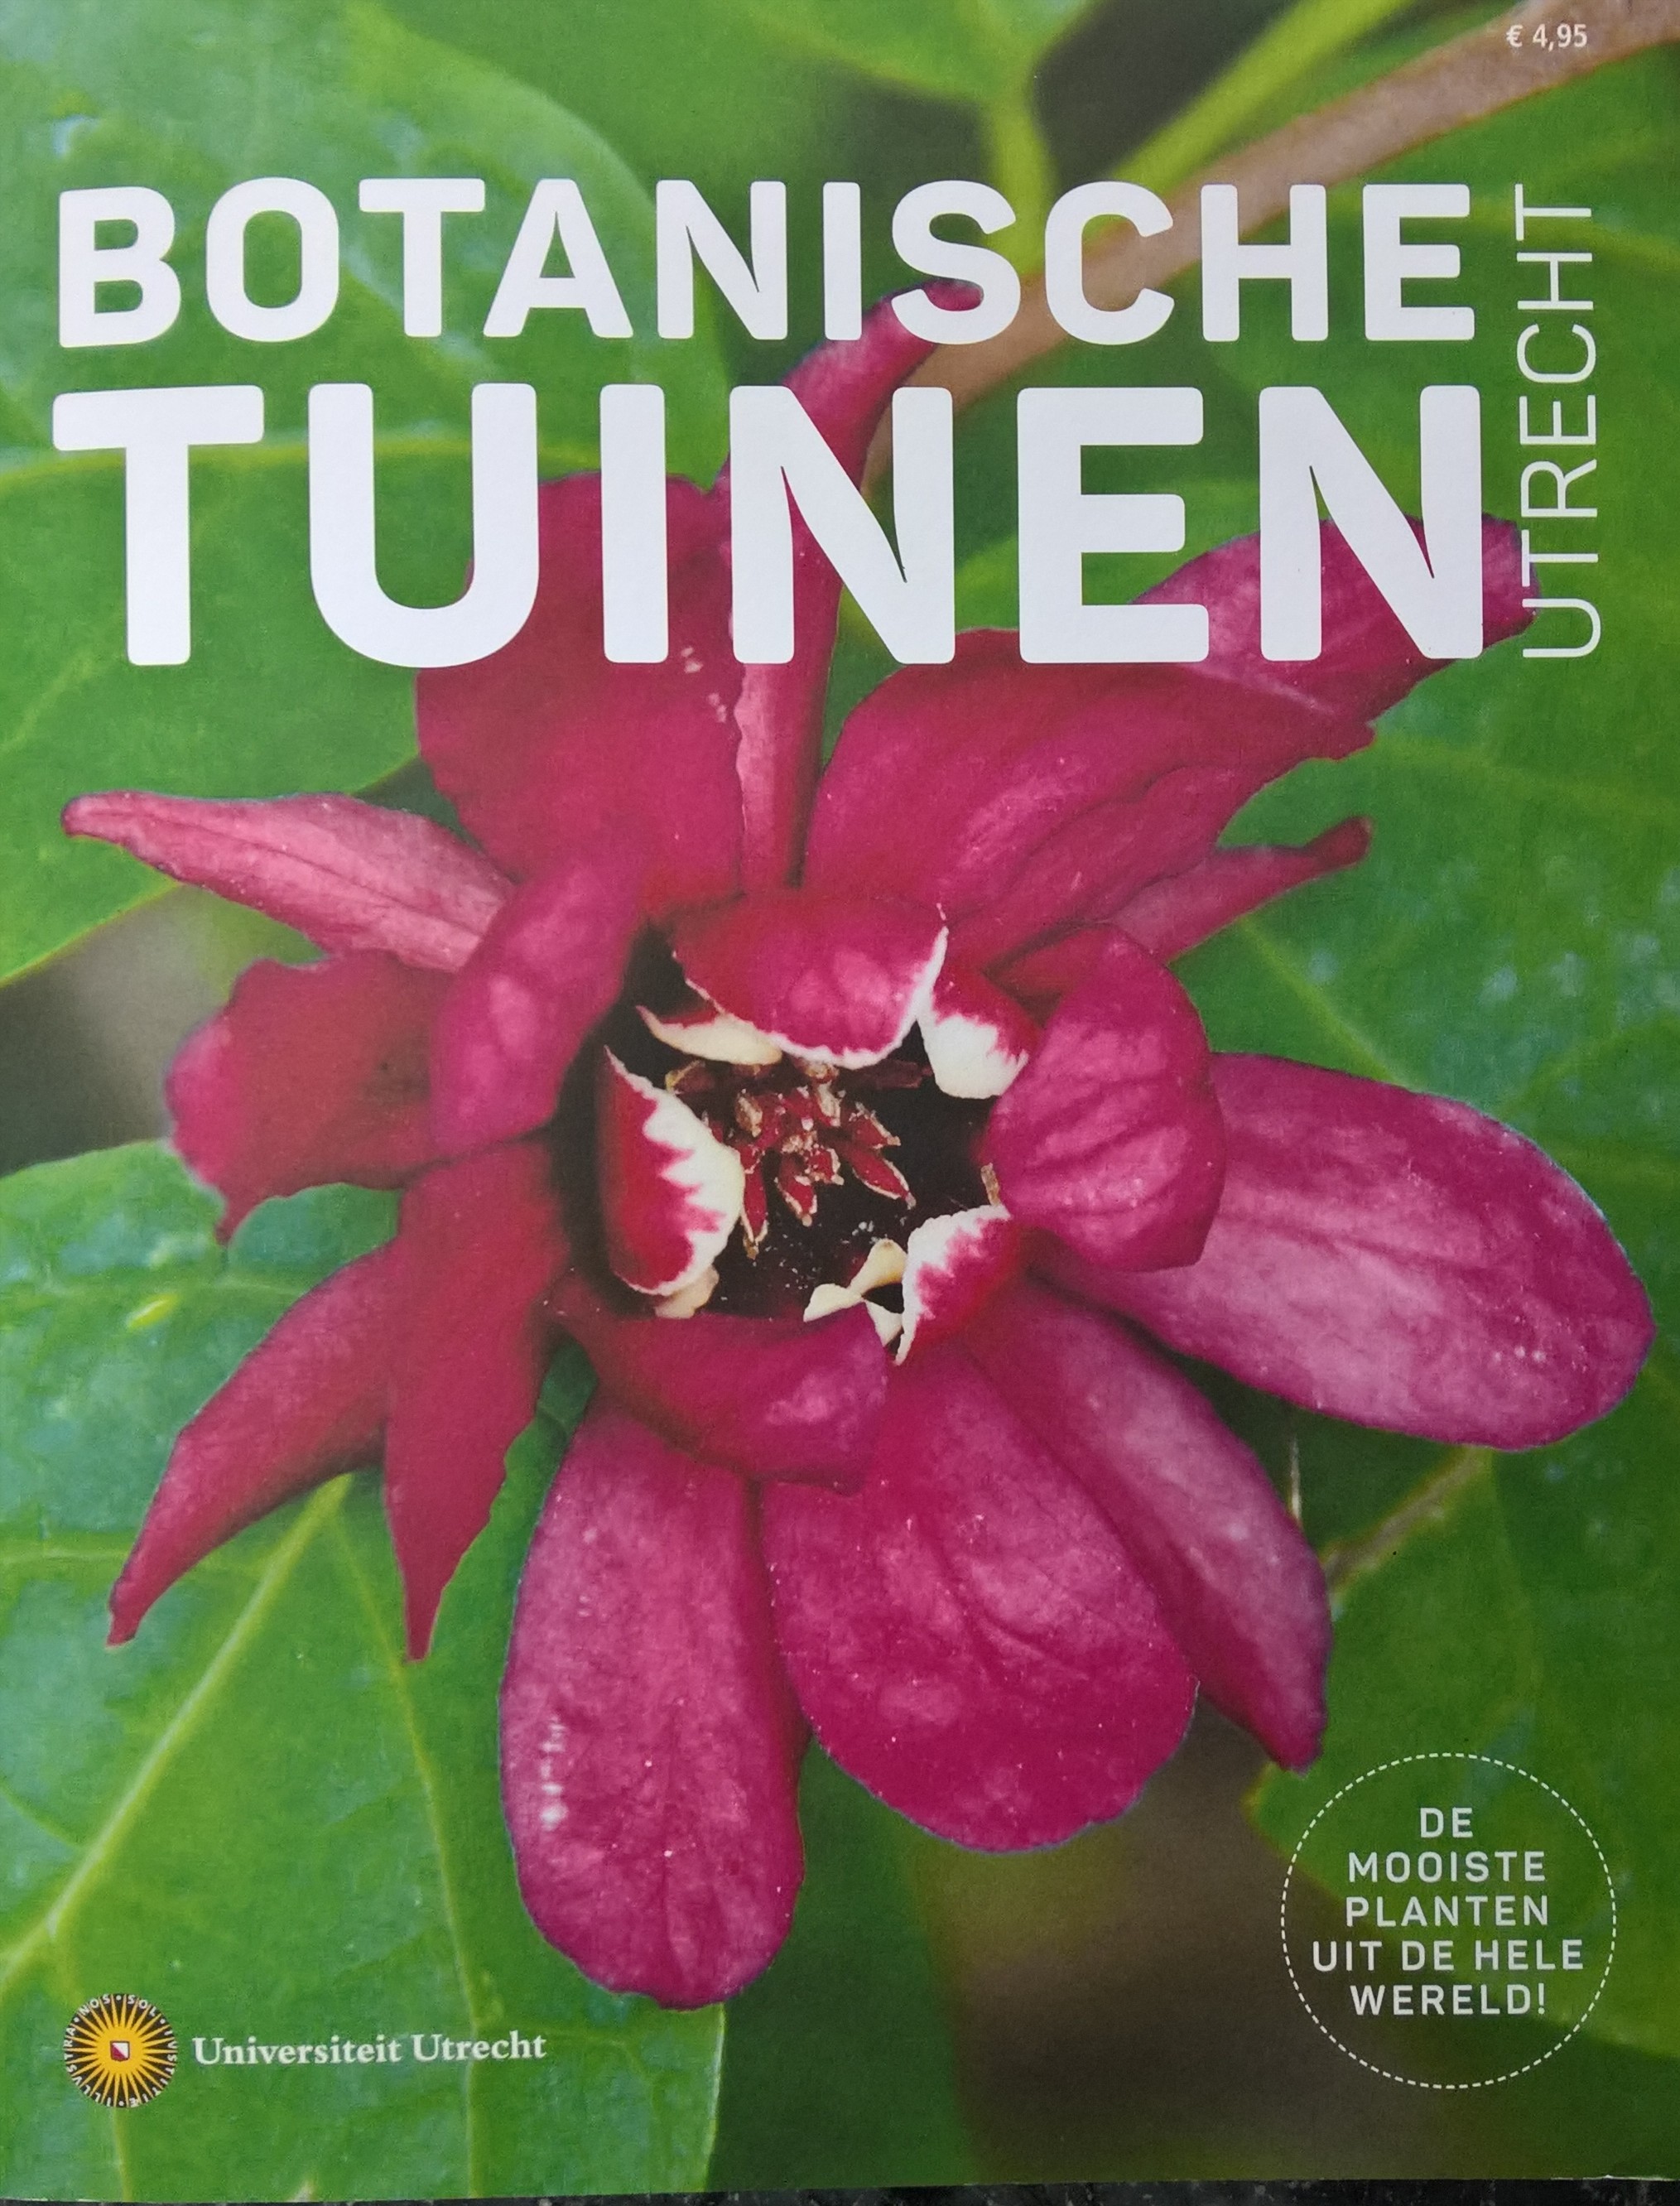 Artikel Botanische Tuinen Utrecht